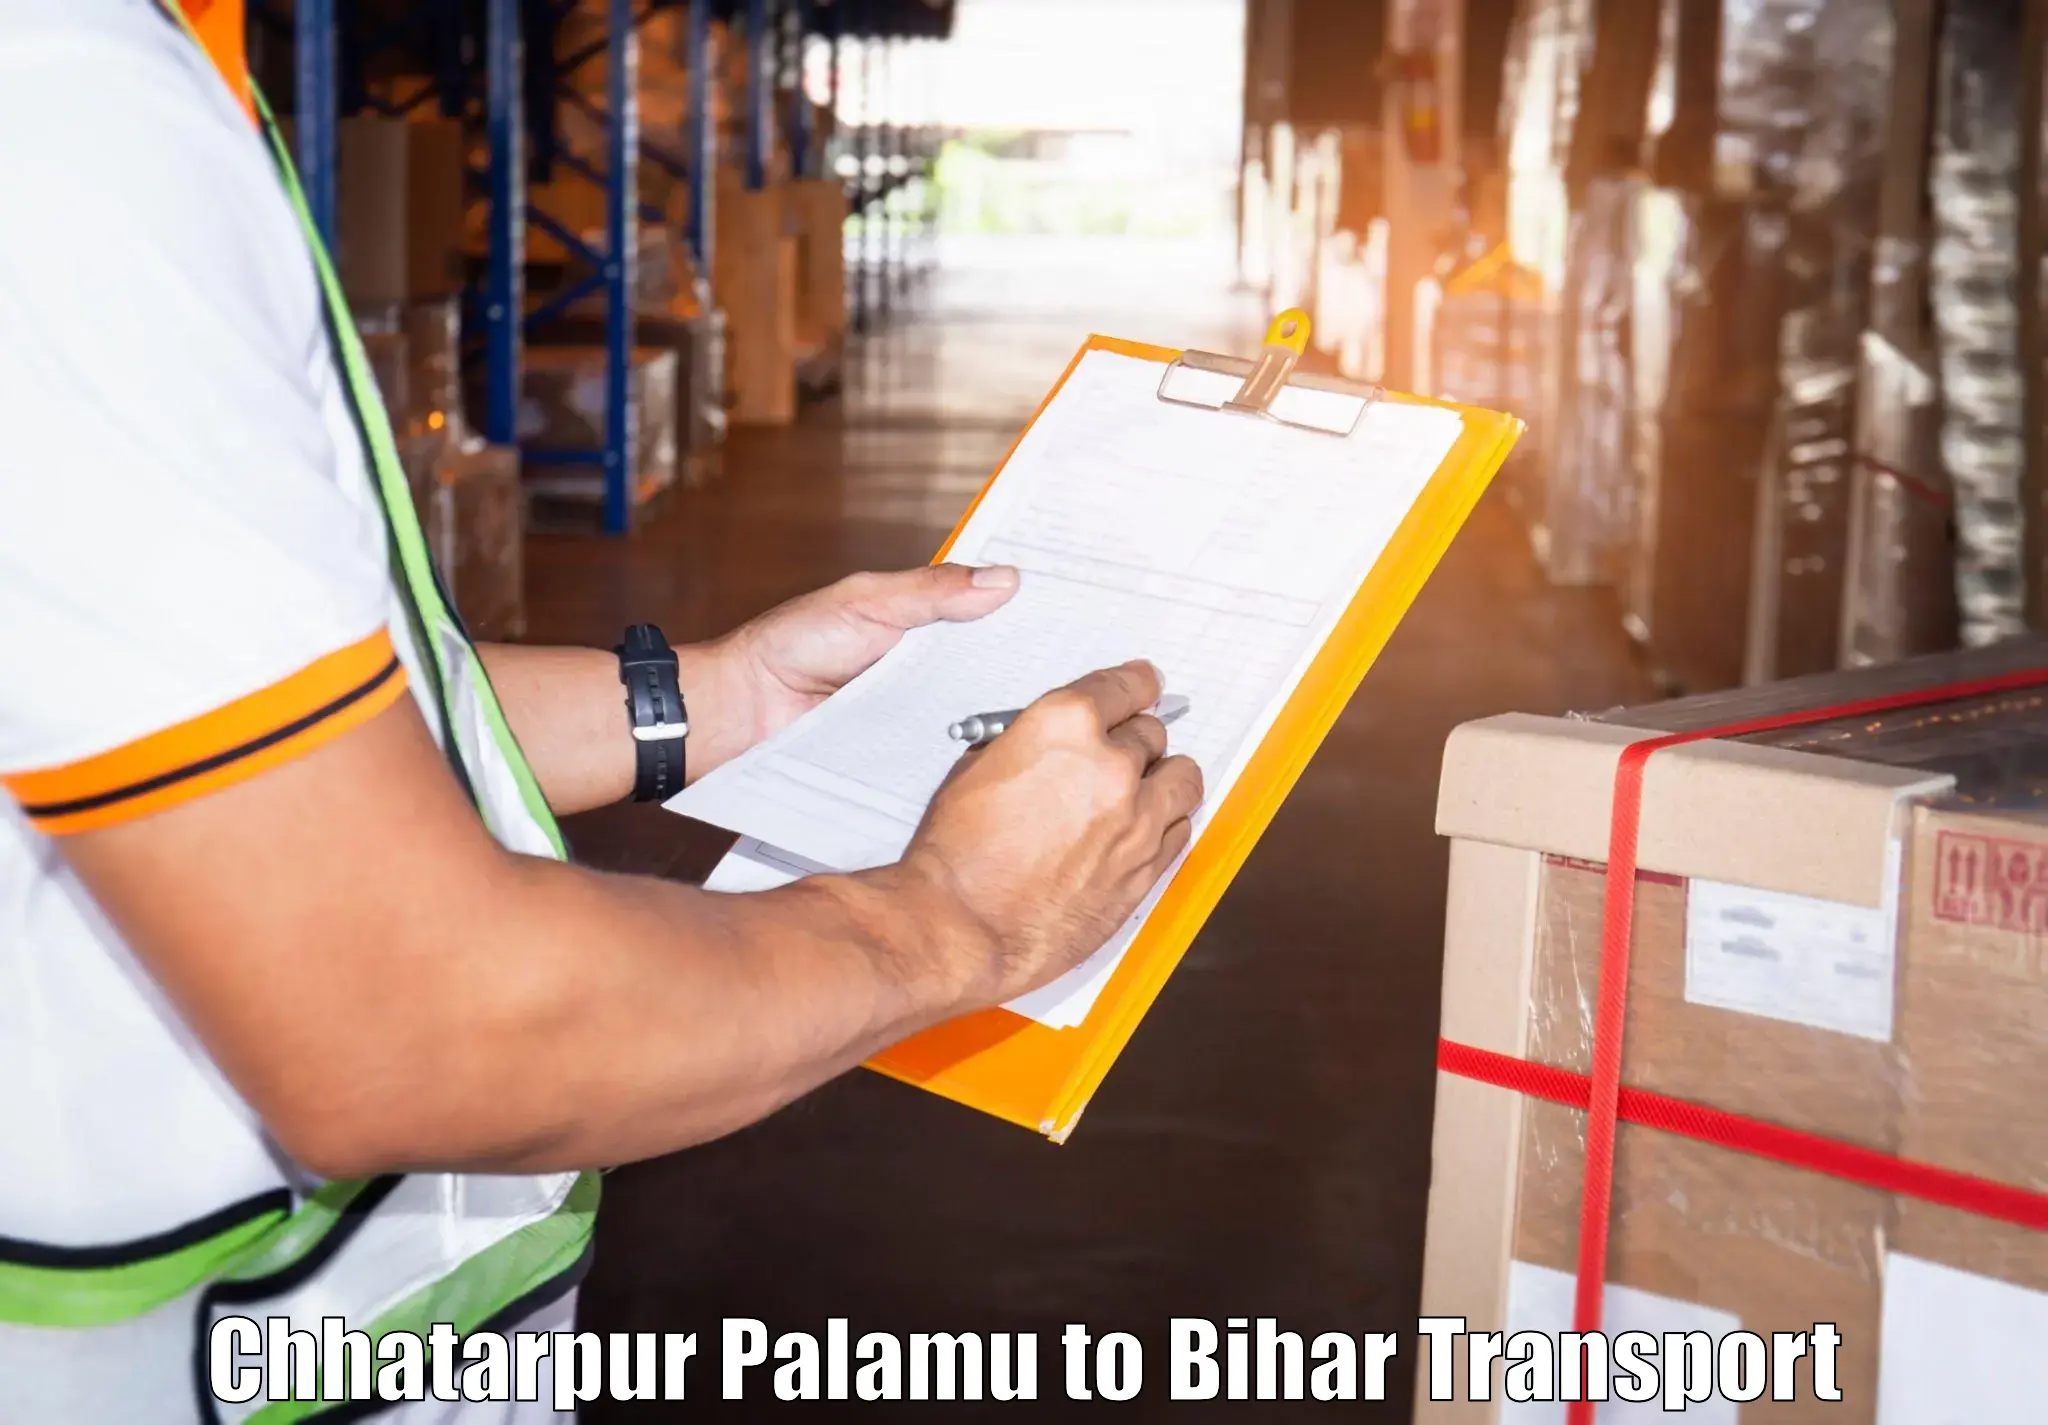 Delivery service Chhatarpur Palamu to Kamtaul